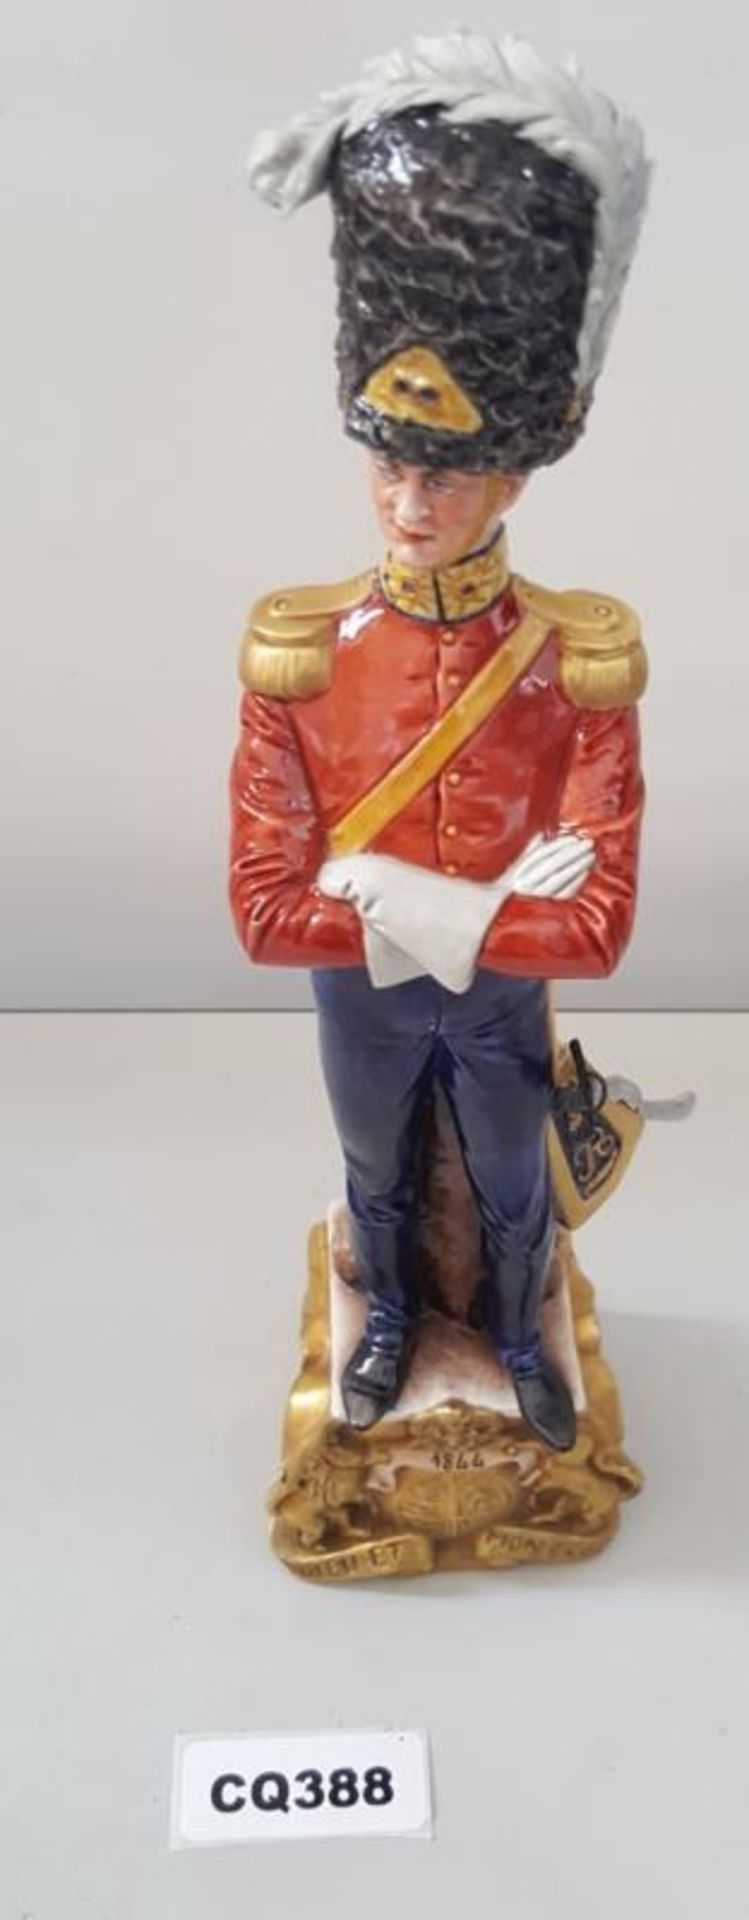 1 x Rare Italian Porcelain Bruno Merli Soldiers Figurines 1844- Ref CQ388 E